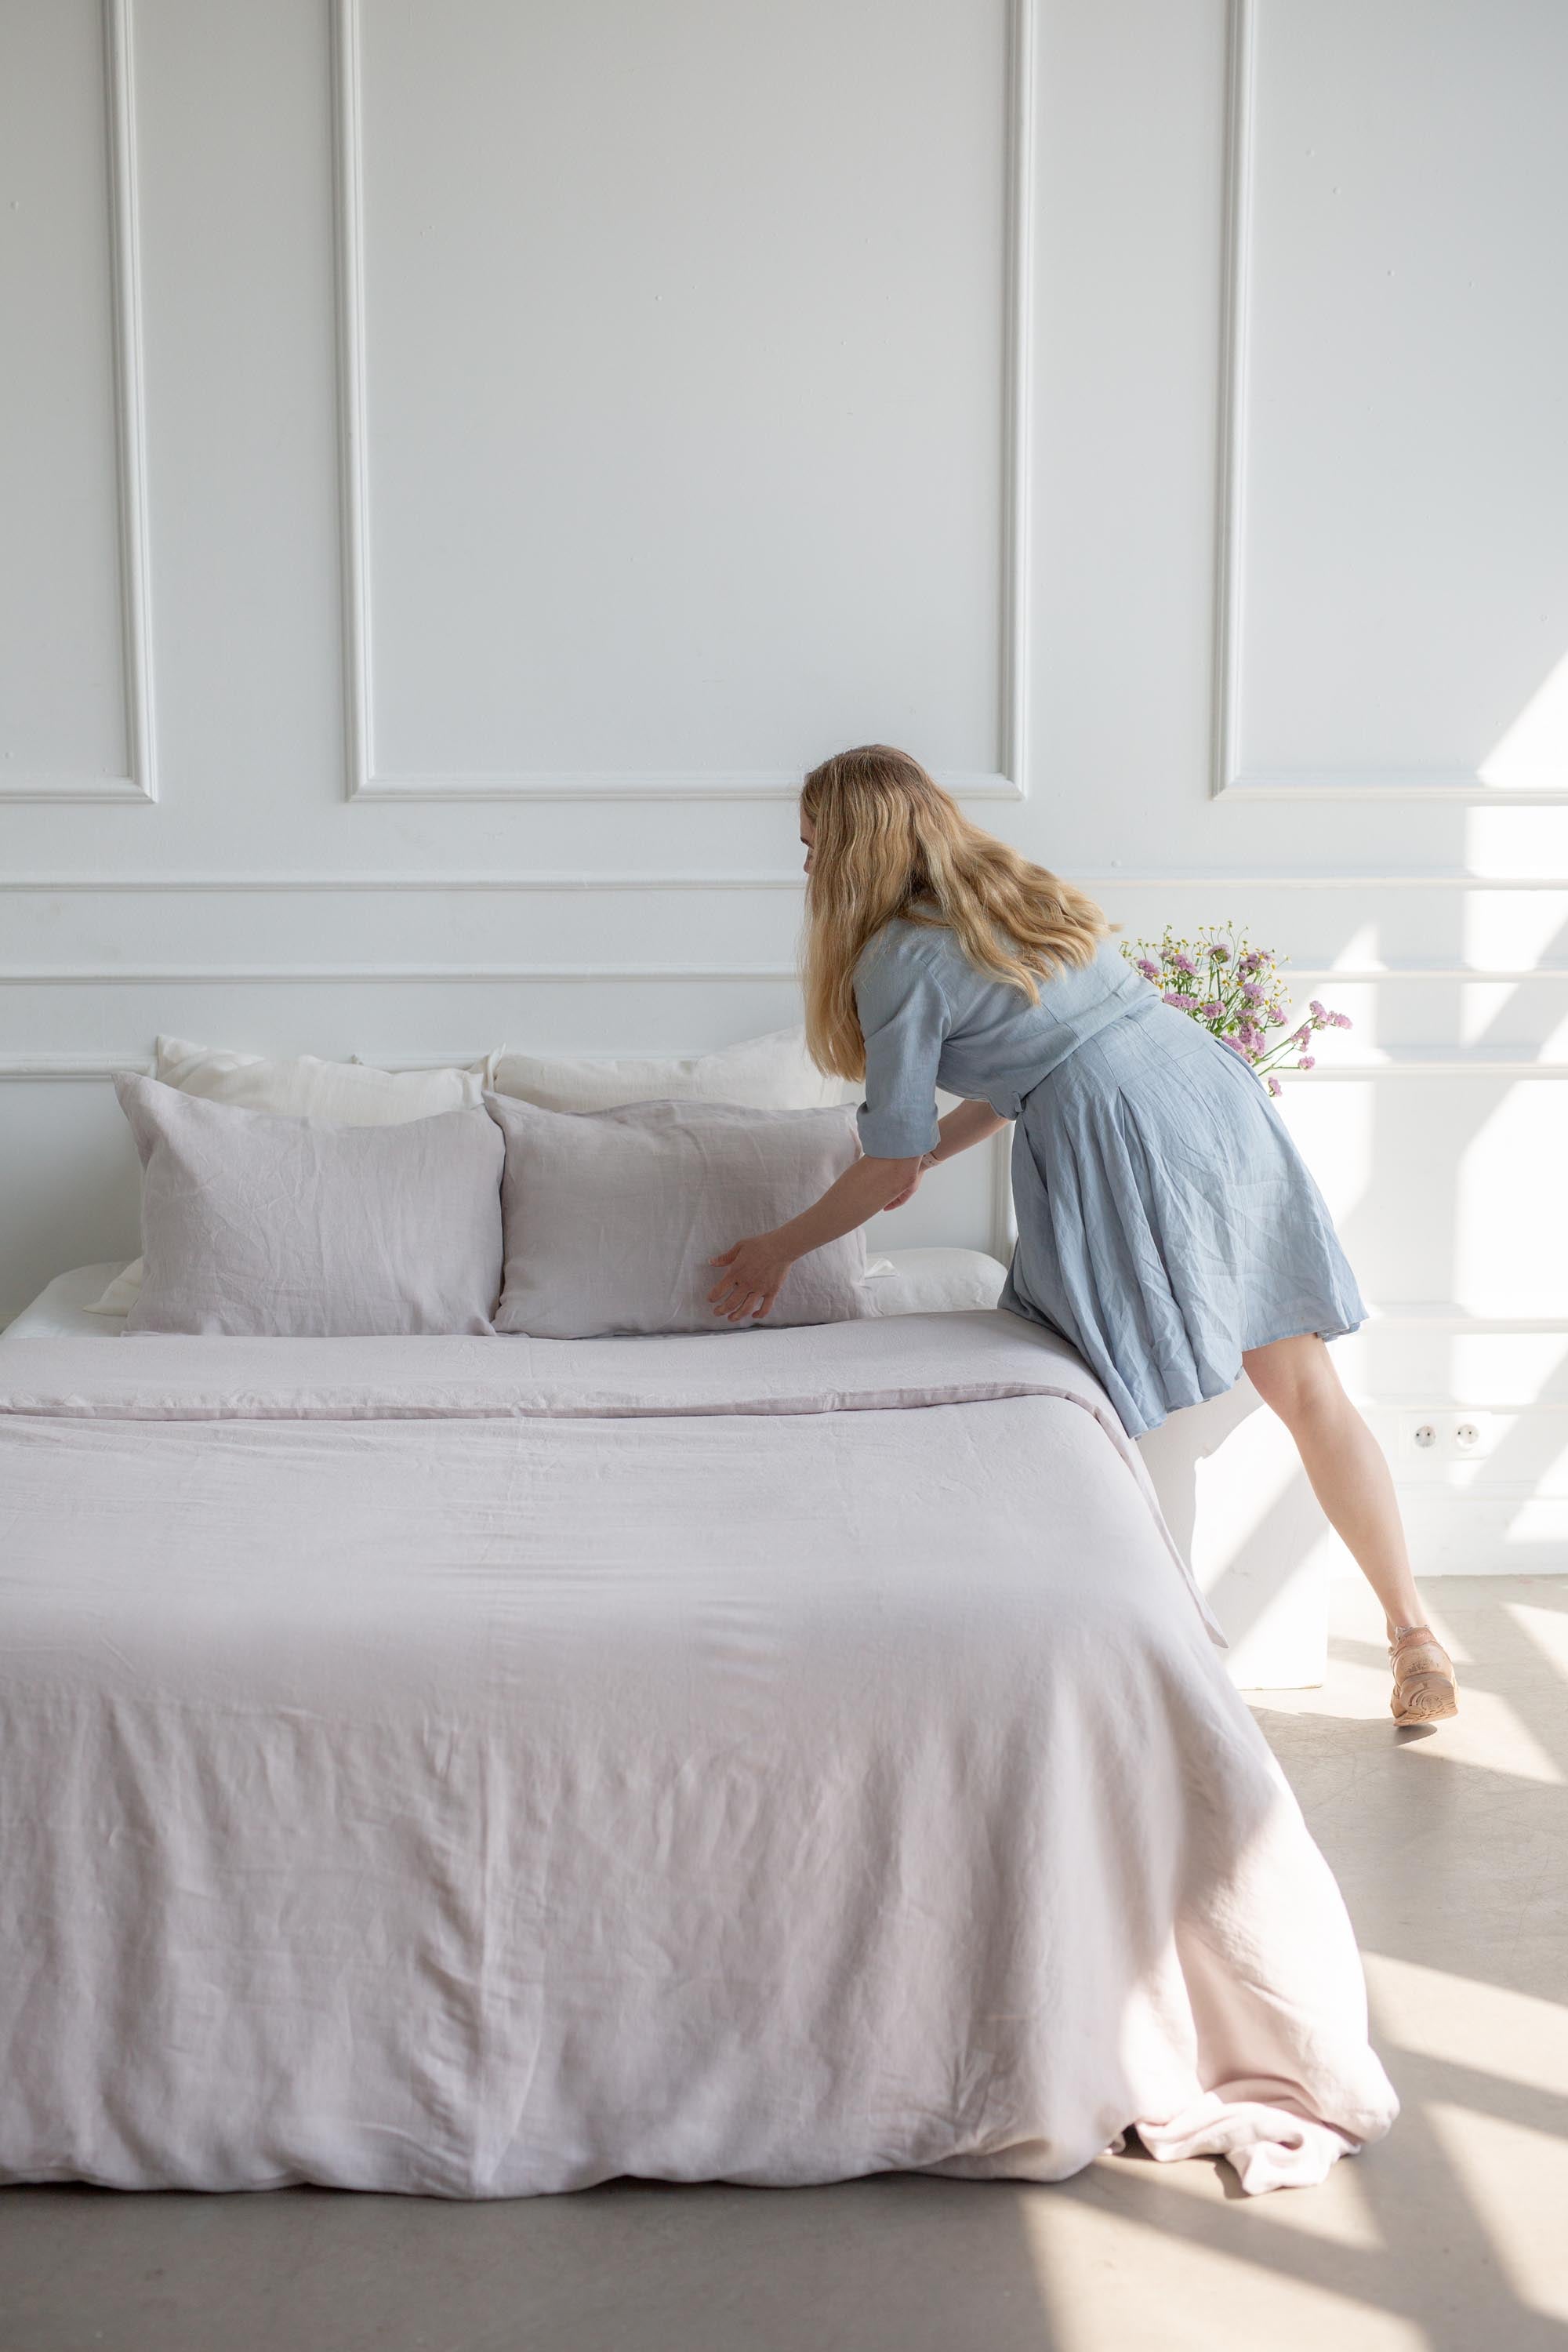 Woman Tyding Cream LInen Pillowcase On Bed By AmourlInen